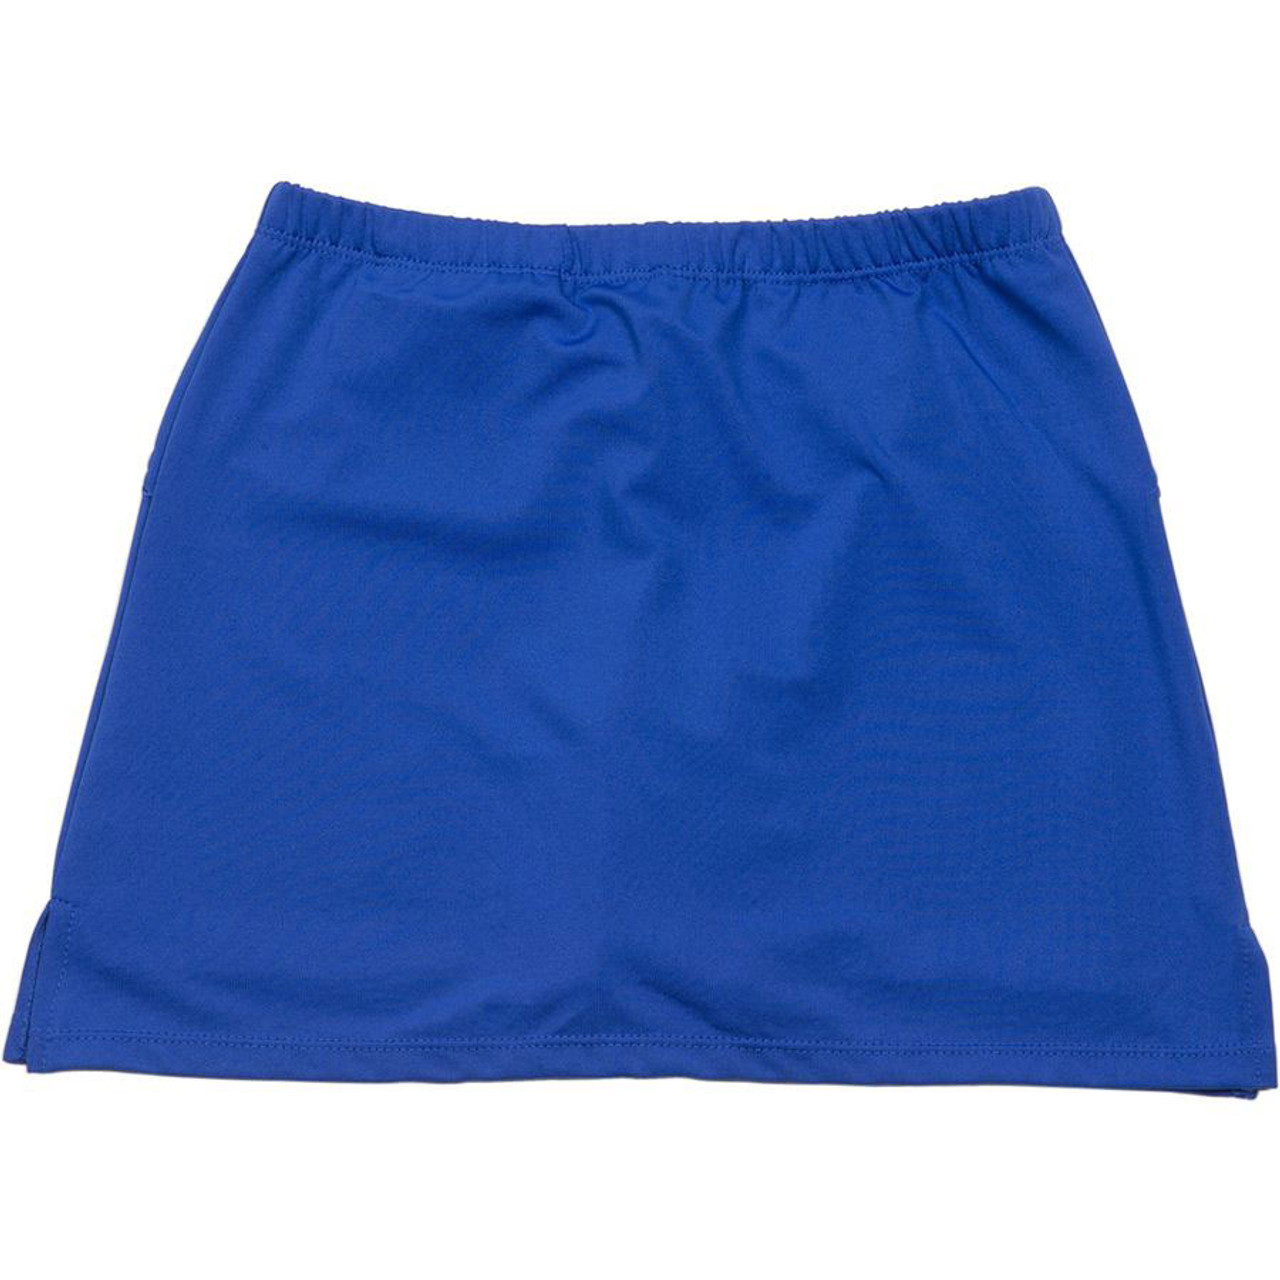 Skorts for women sports wear | tennis & netball uniform Plus Size at ...